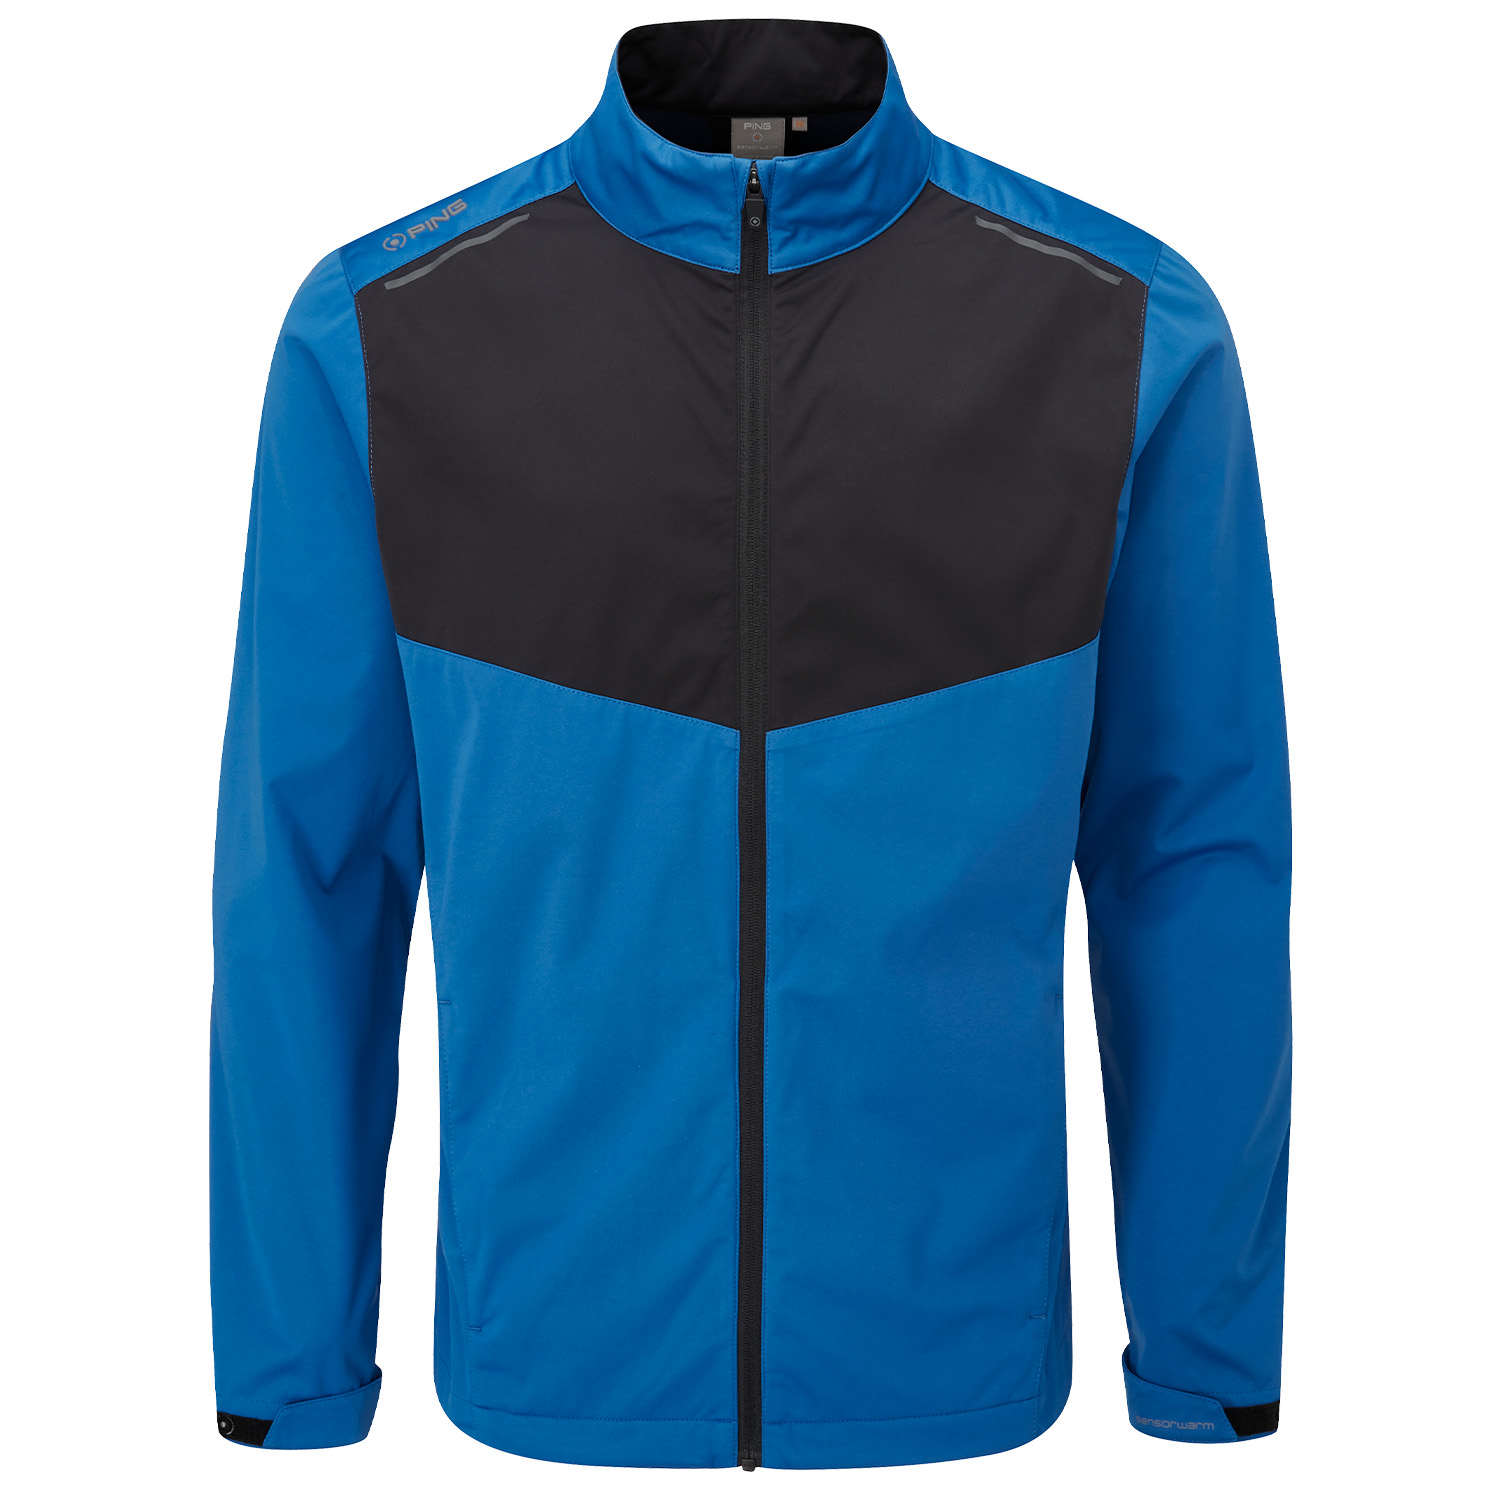 PING Technique Windproof Golf Jacket Snorkel Blue/Black | Scottsdale Golf